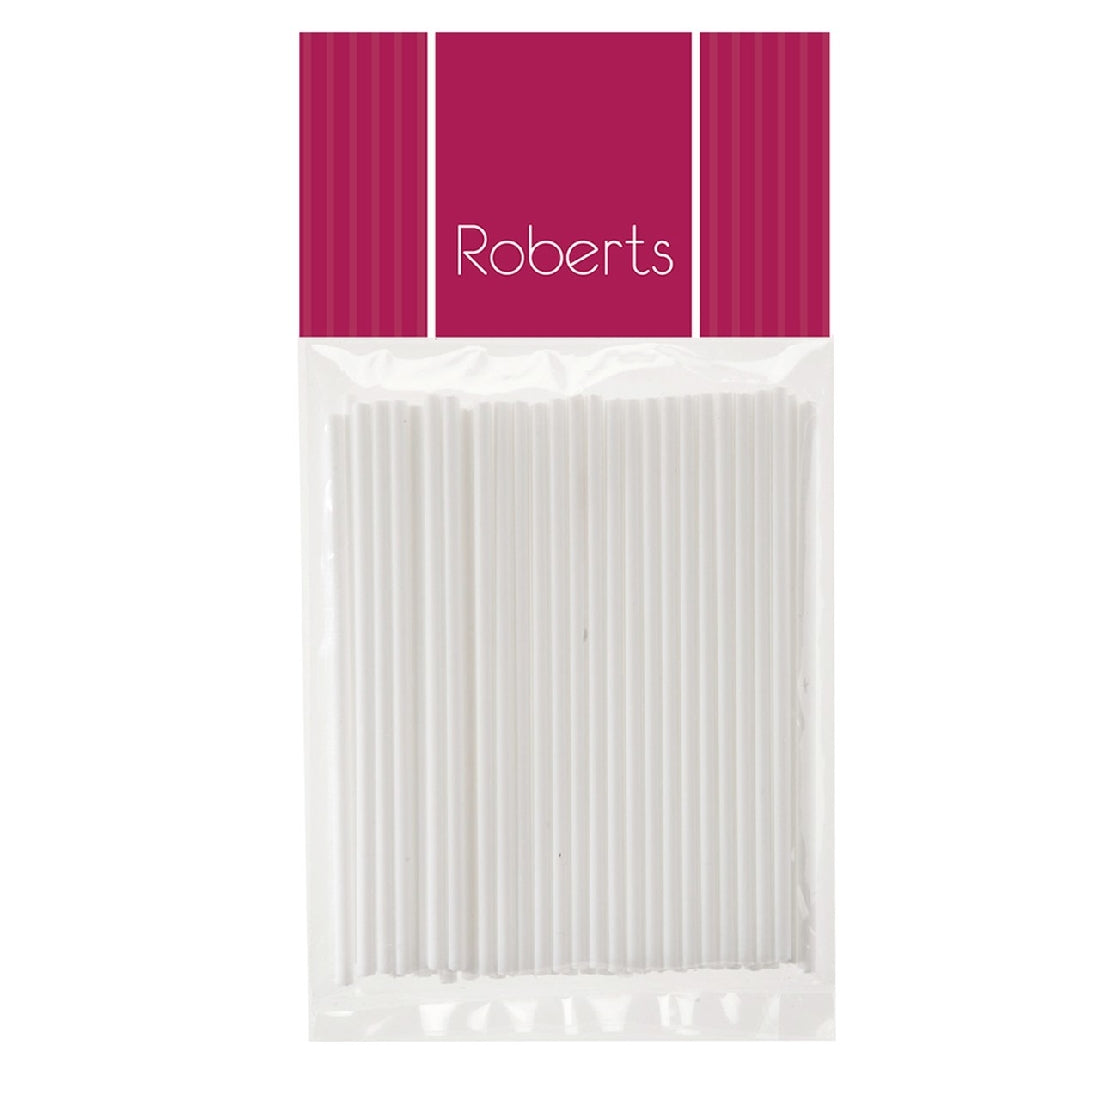 Roberts Edible Crafts - 100mm Pk 50 White Lollypop Sticks